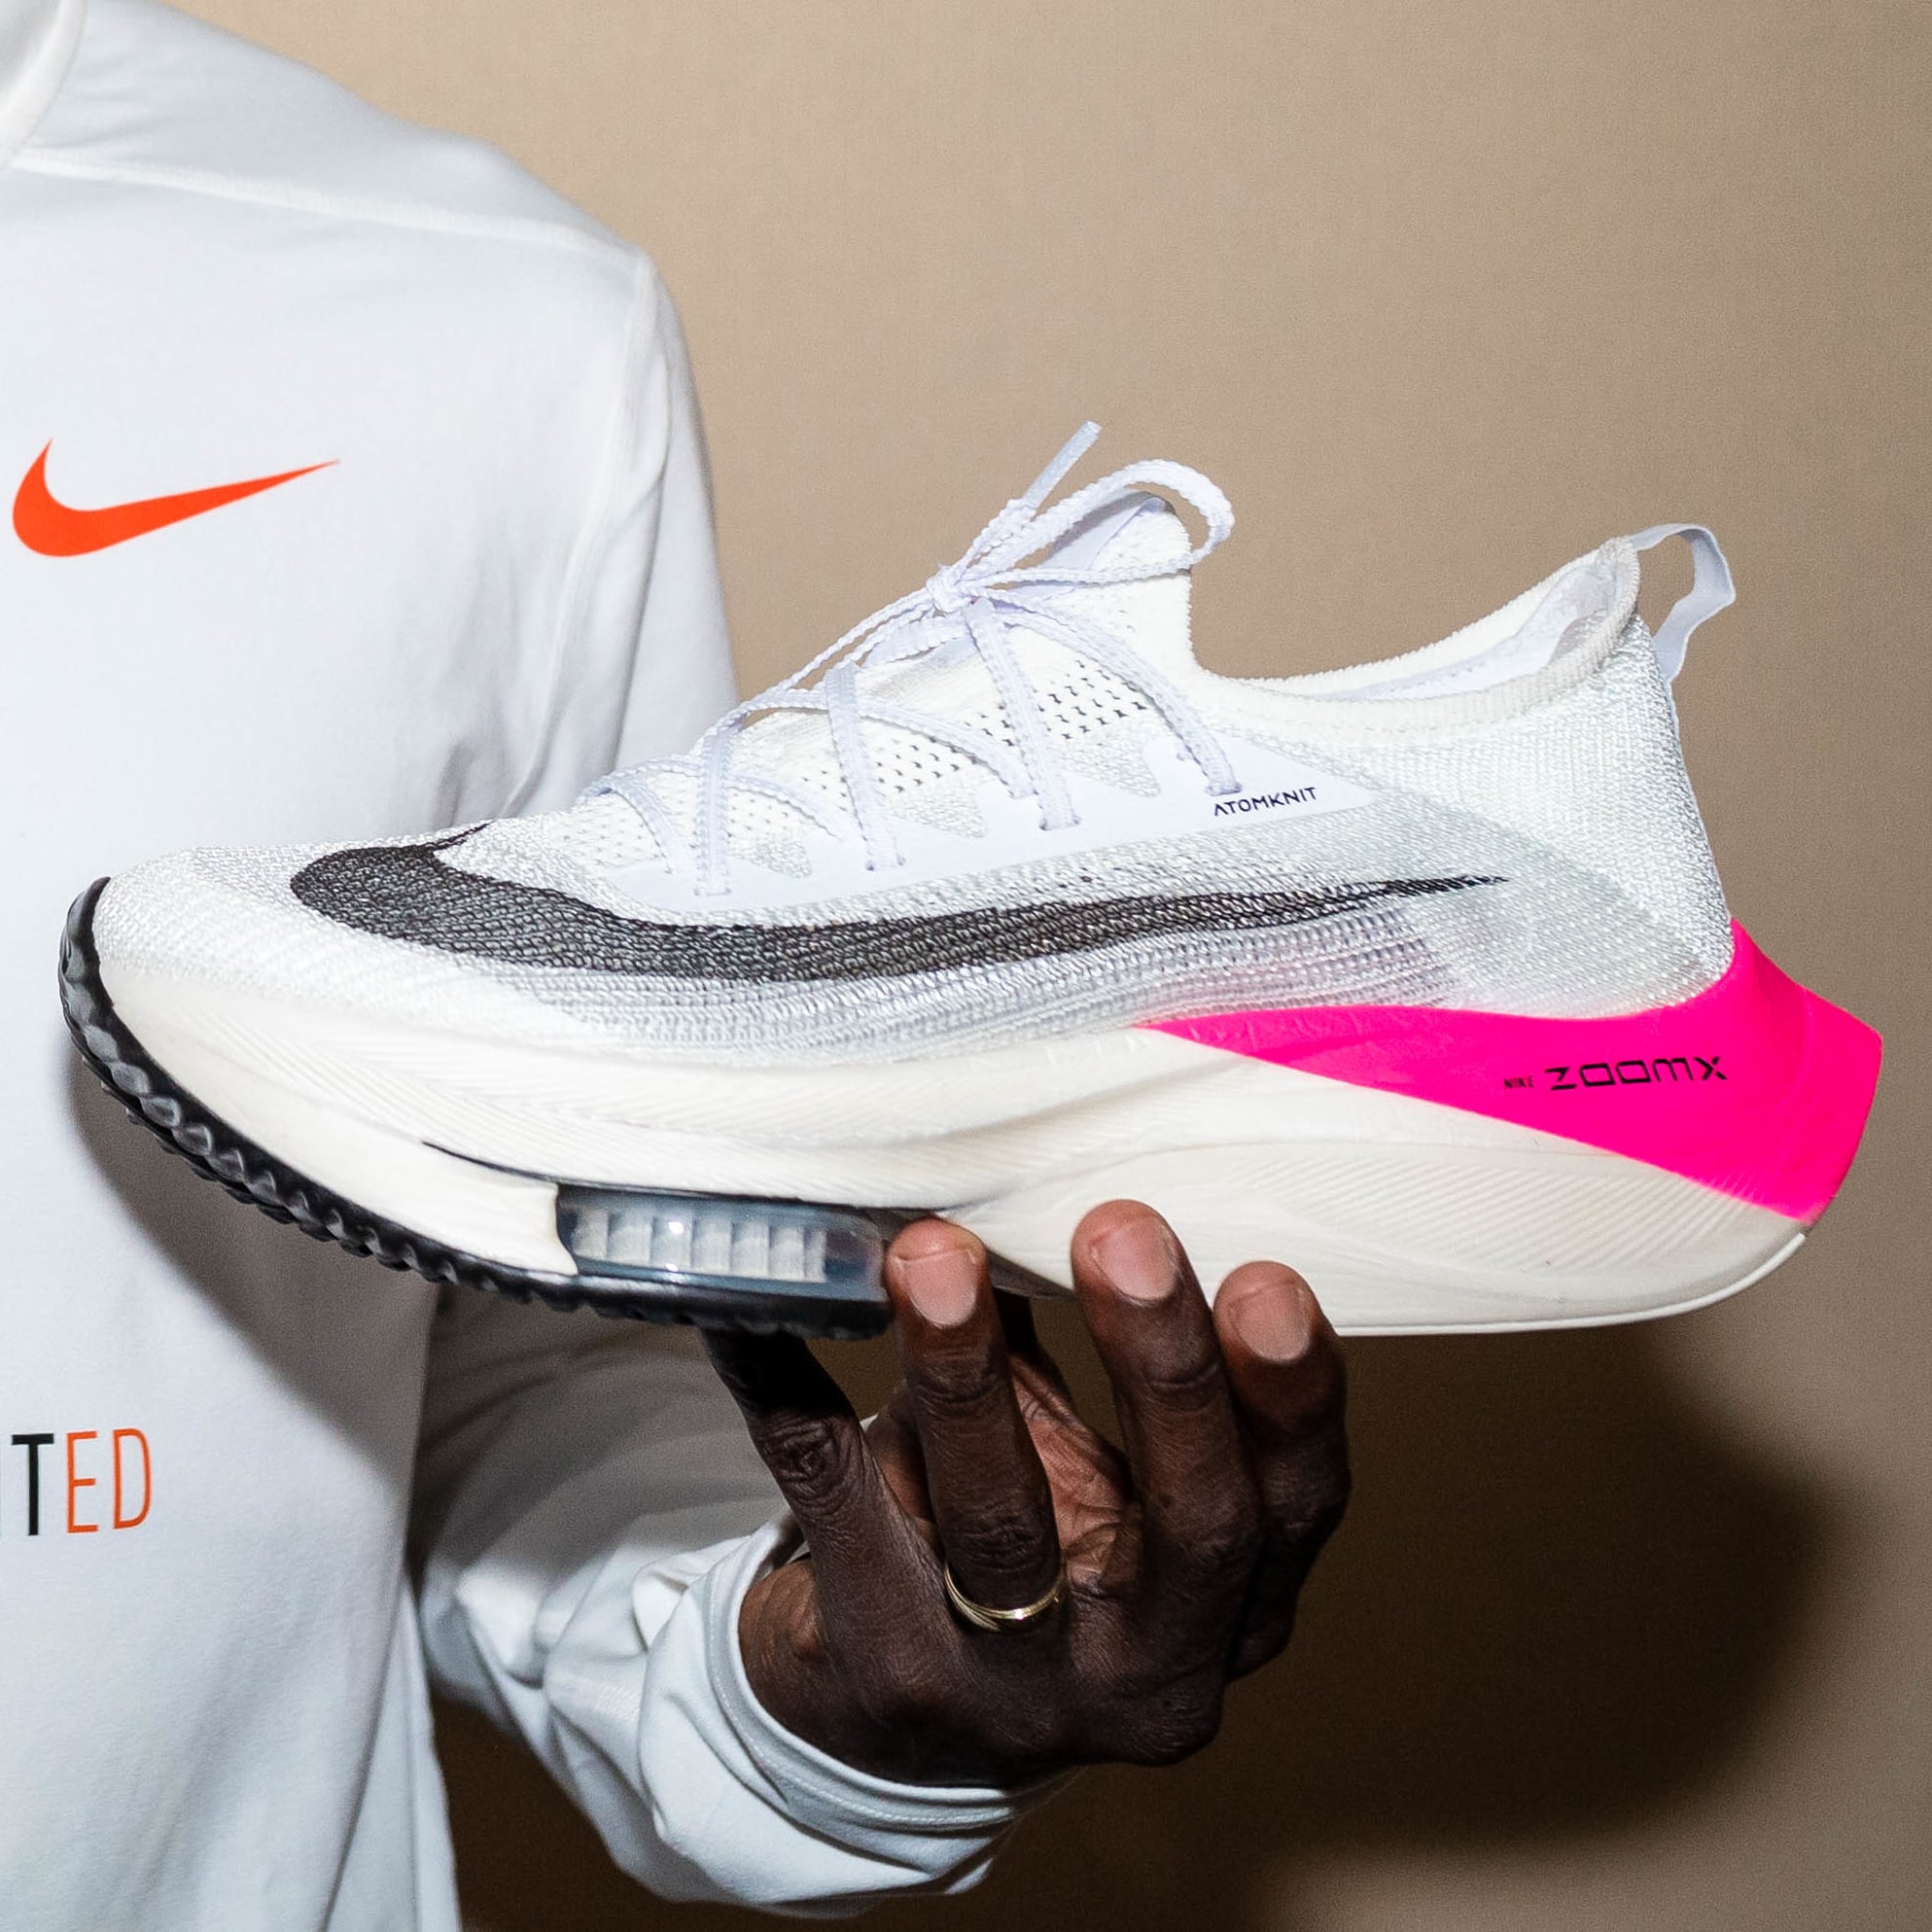 Eliud Kipchoge 1:59 Run Nike Next% Sneaker | Sole Collector